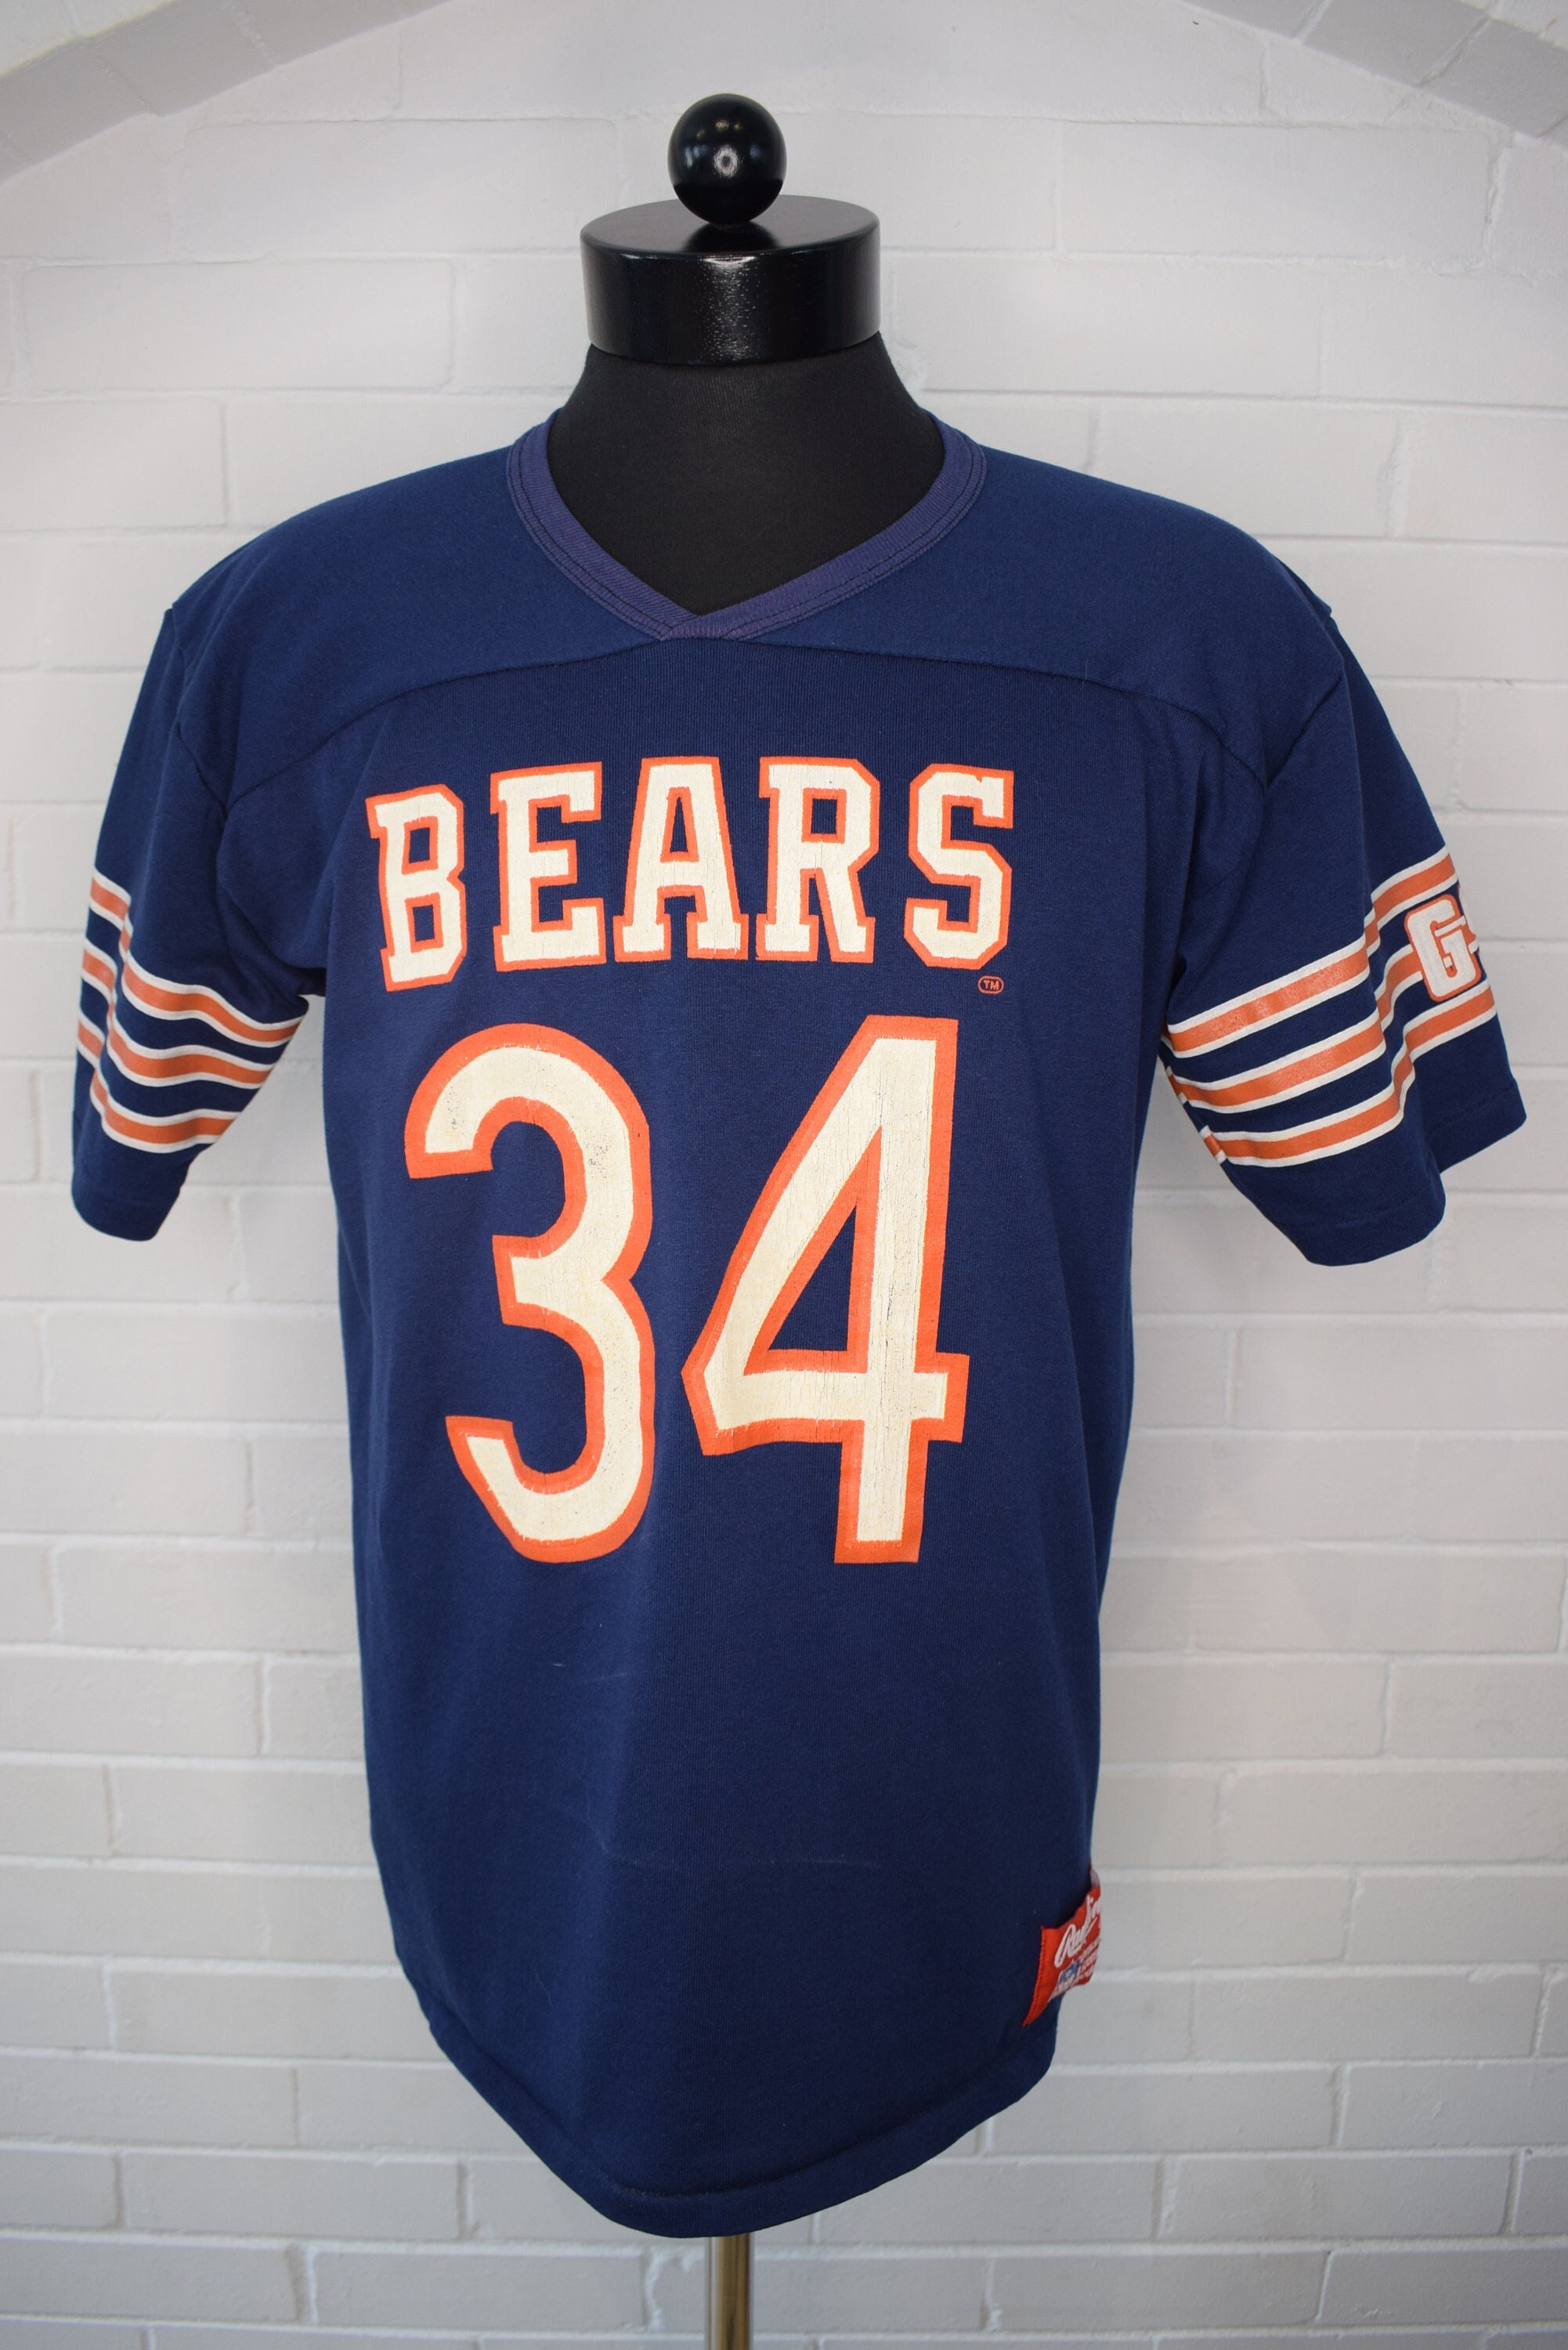 bears jersey 34